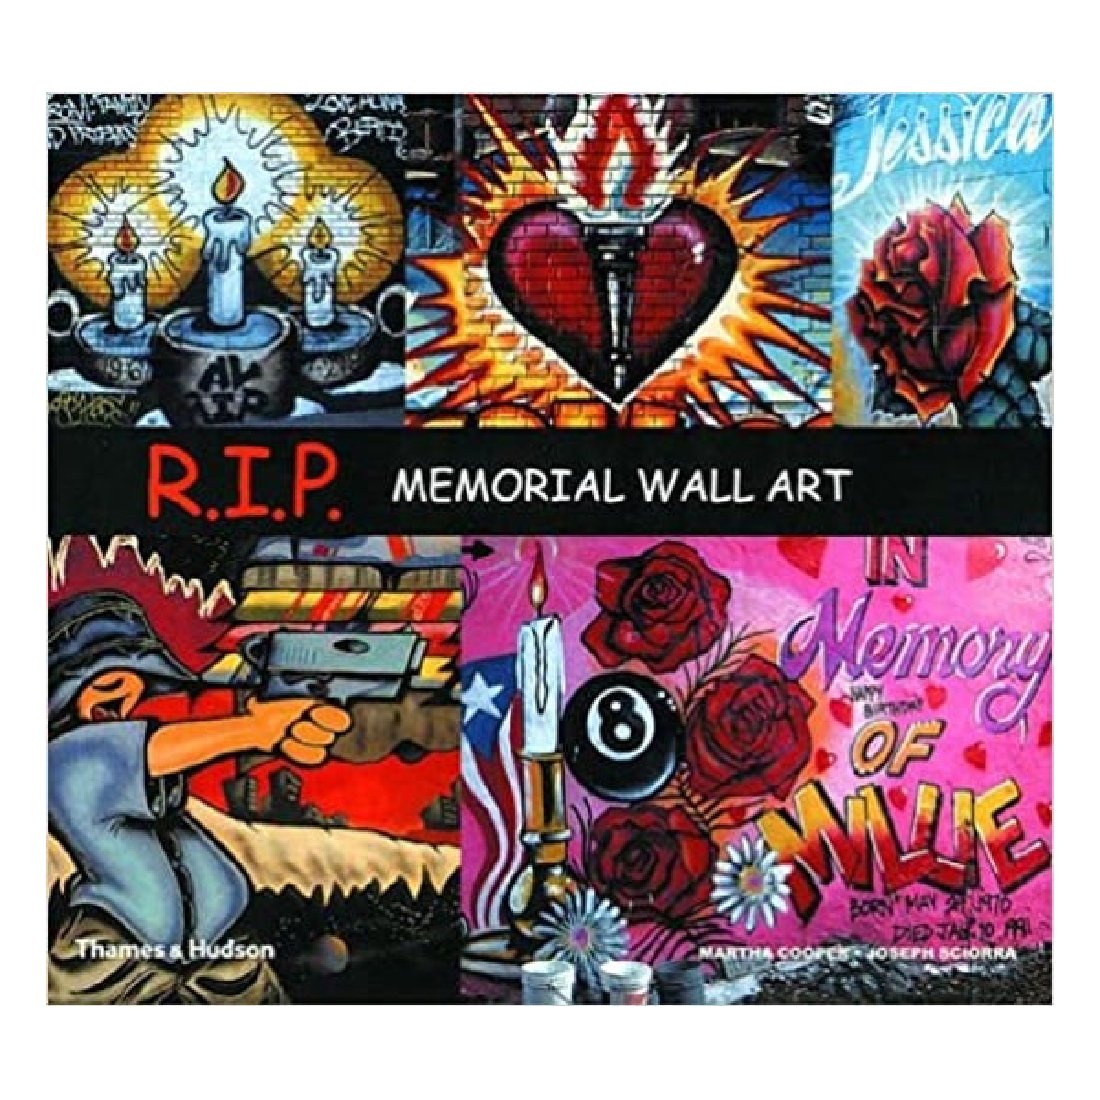 R.I.P. Memorial Wall Art - a book about graffiti